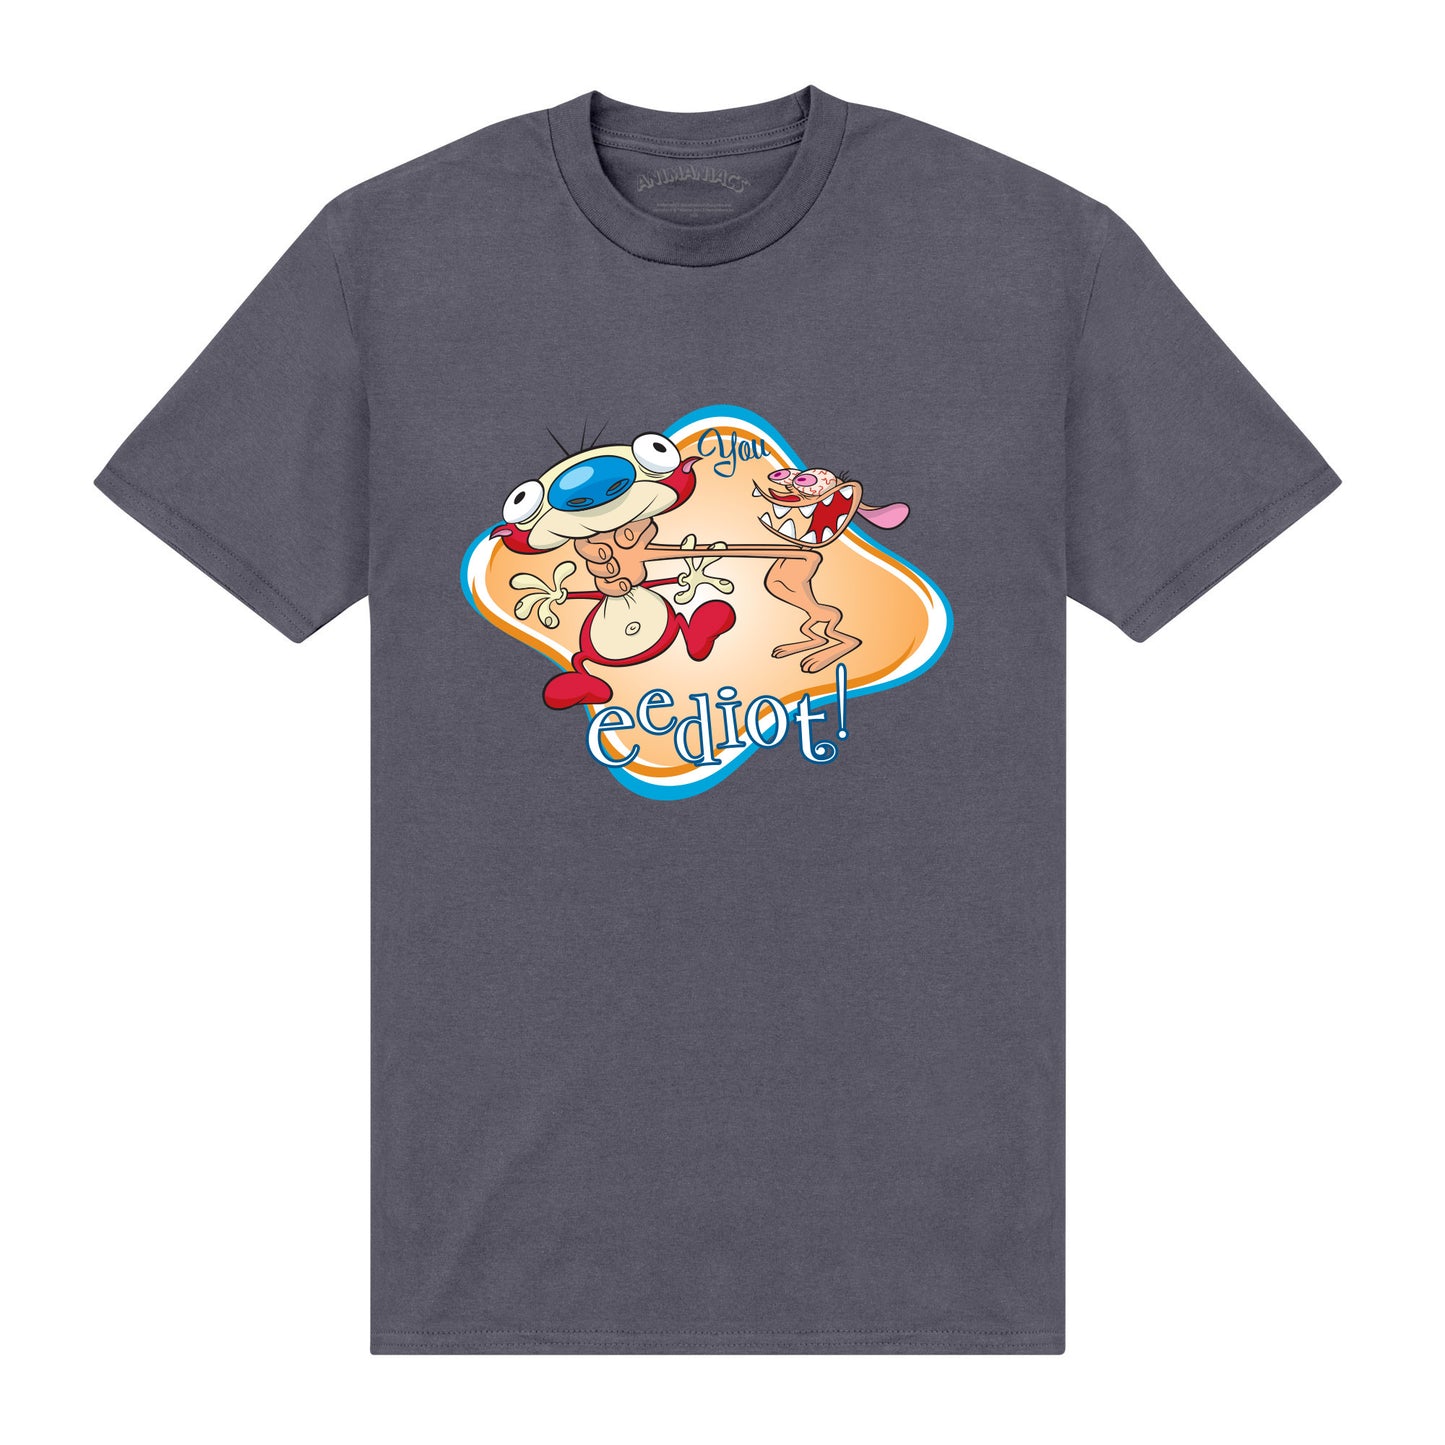 Ren & Stimpy Eediot T-Shirt